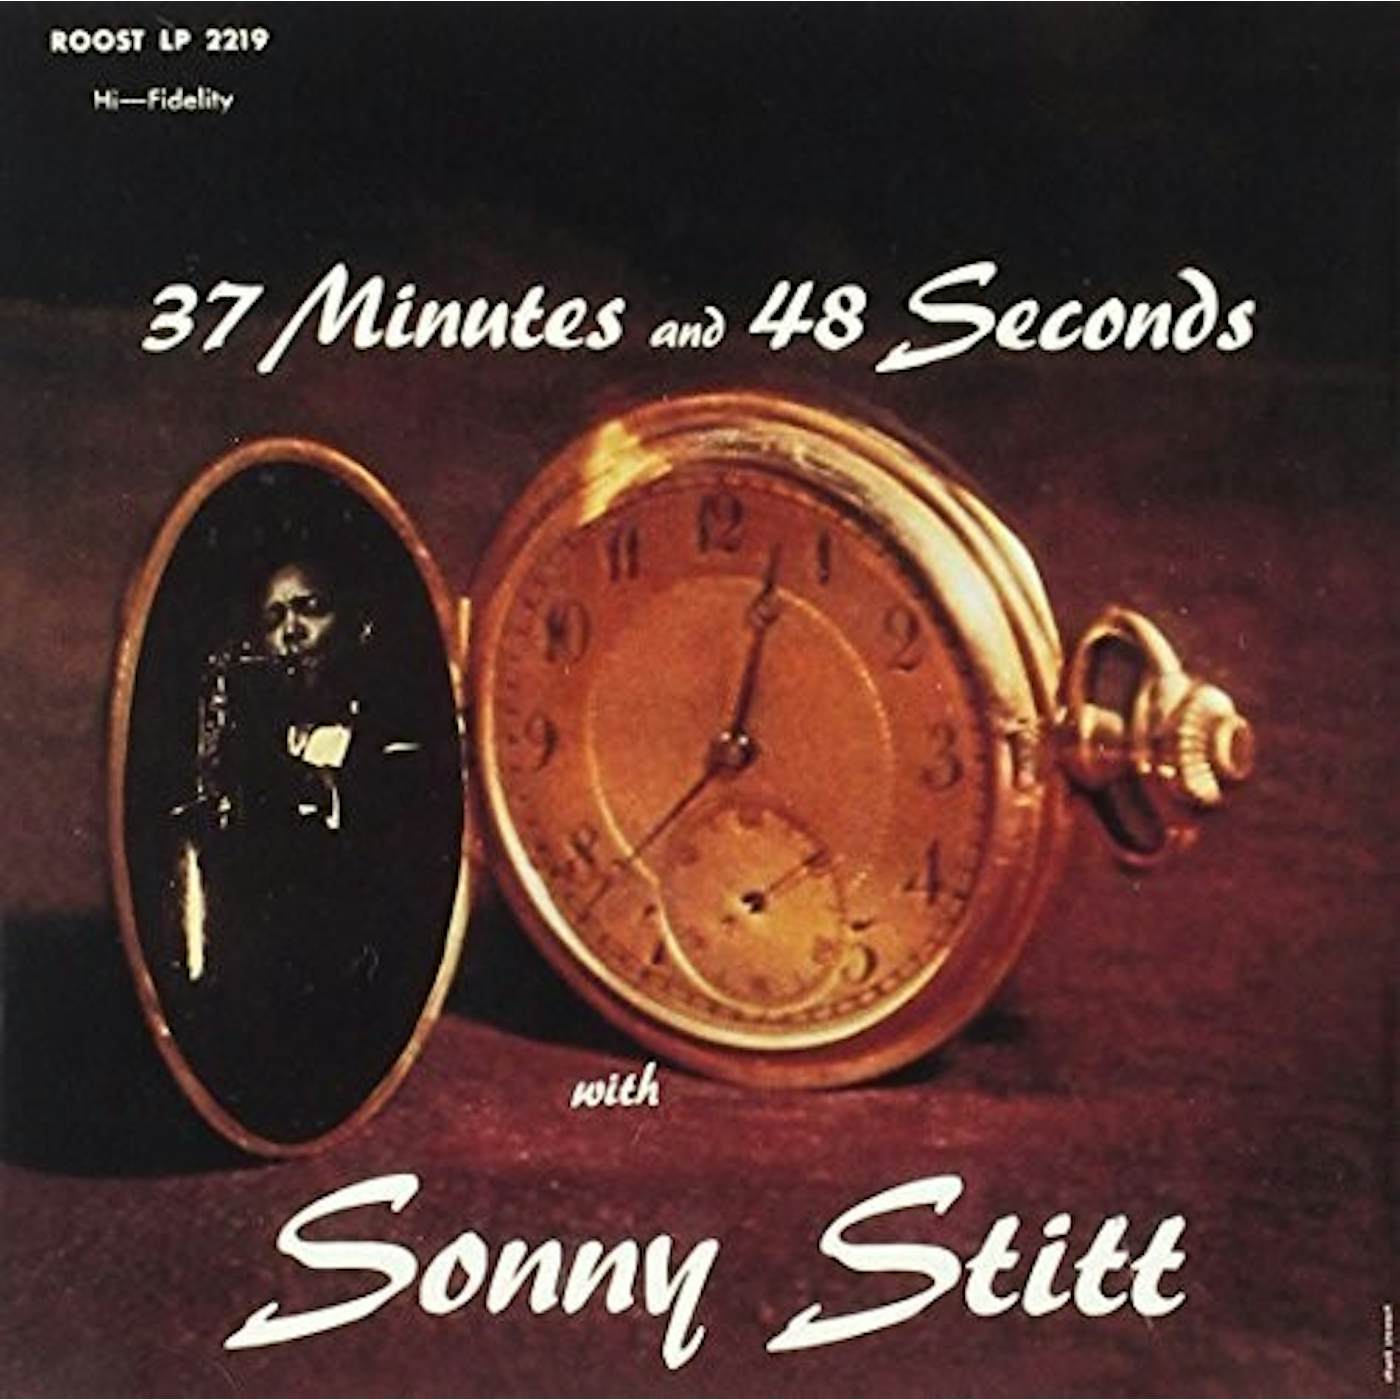 Sonny Stitt 37 MINUTES & 48 SECONDS CD